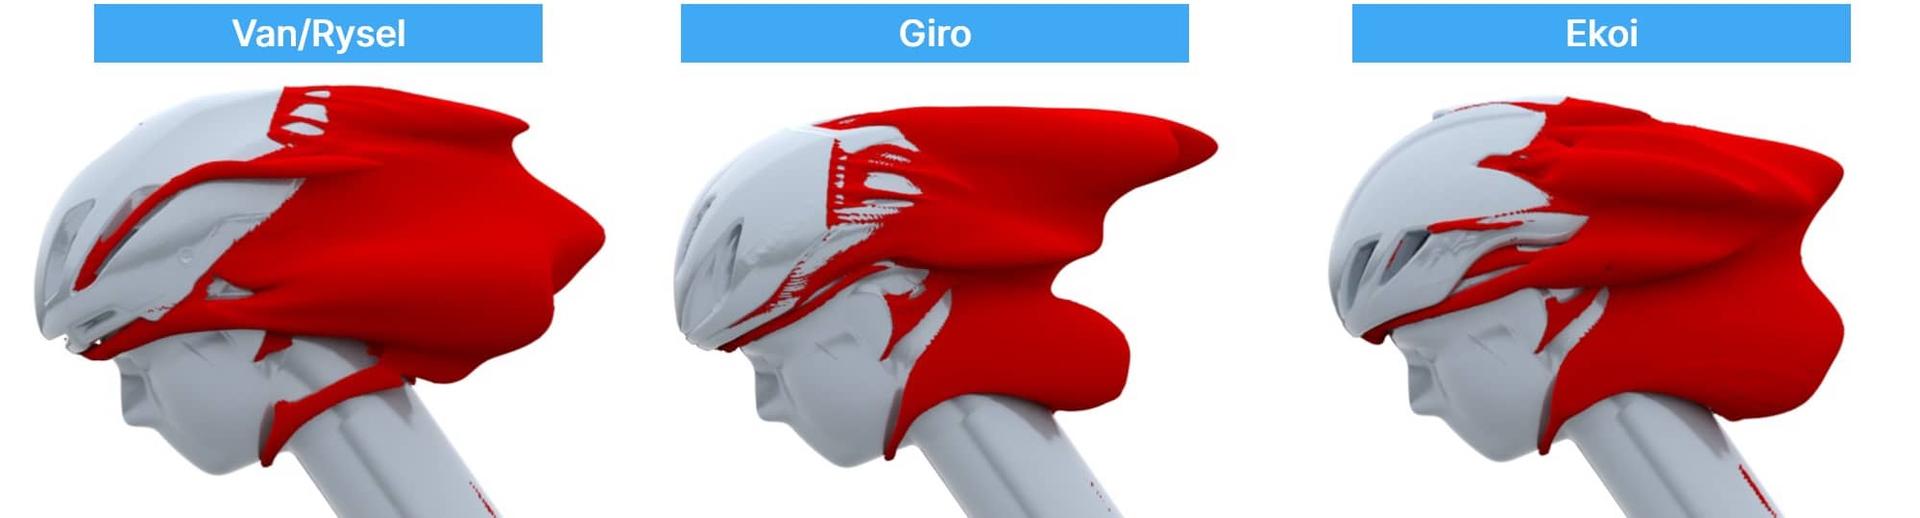 Aerodynamic comparison between the Van/Rysel, Giro and Ekoi helmet